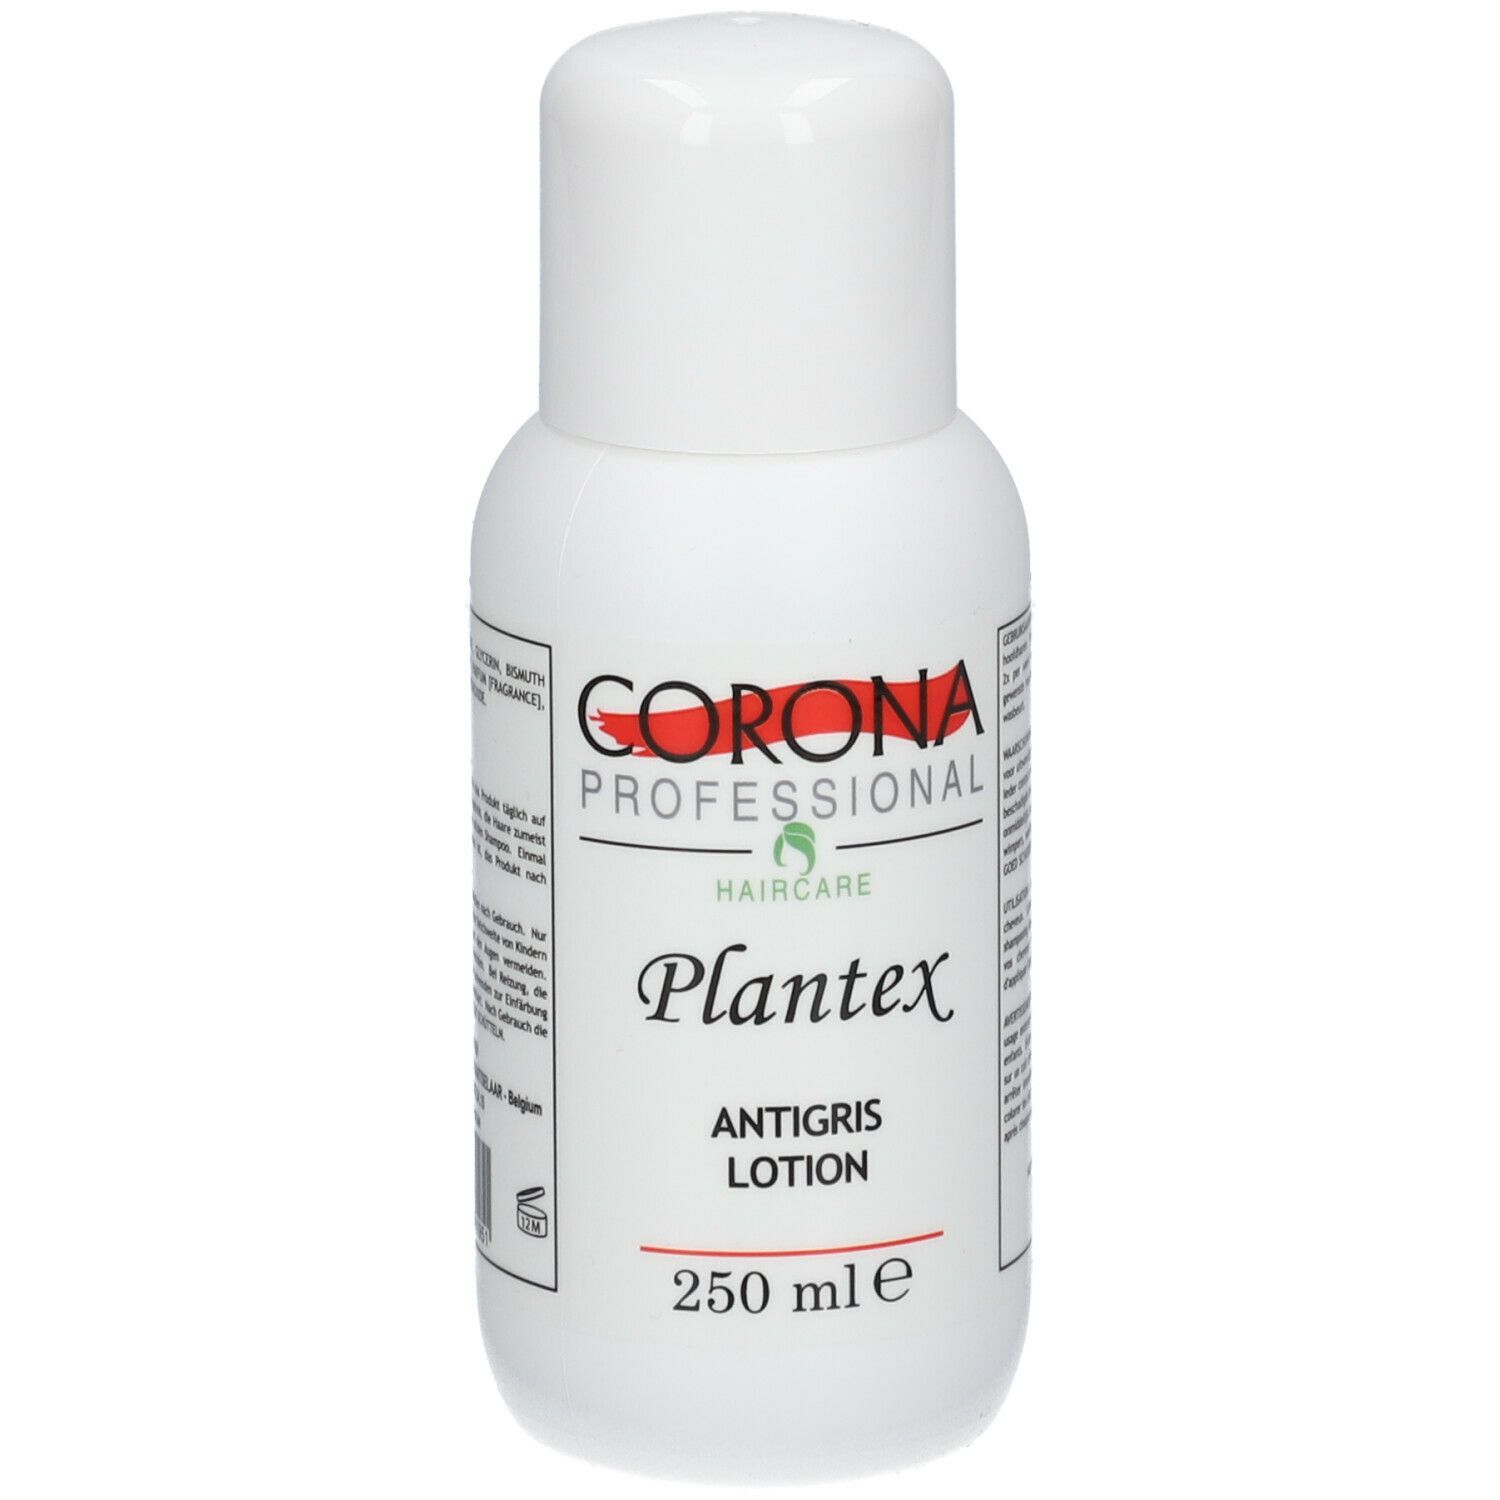 Plantex Super Anti-Gris Lotion